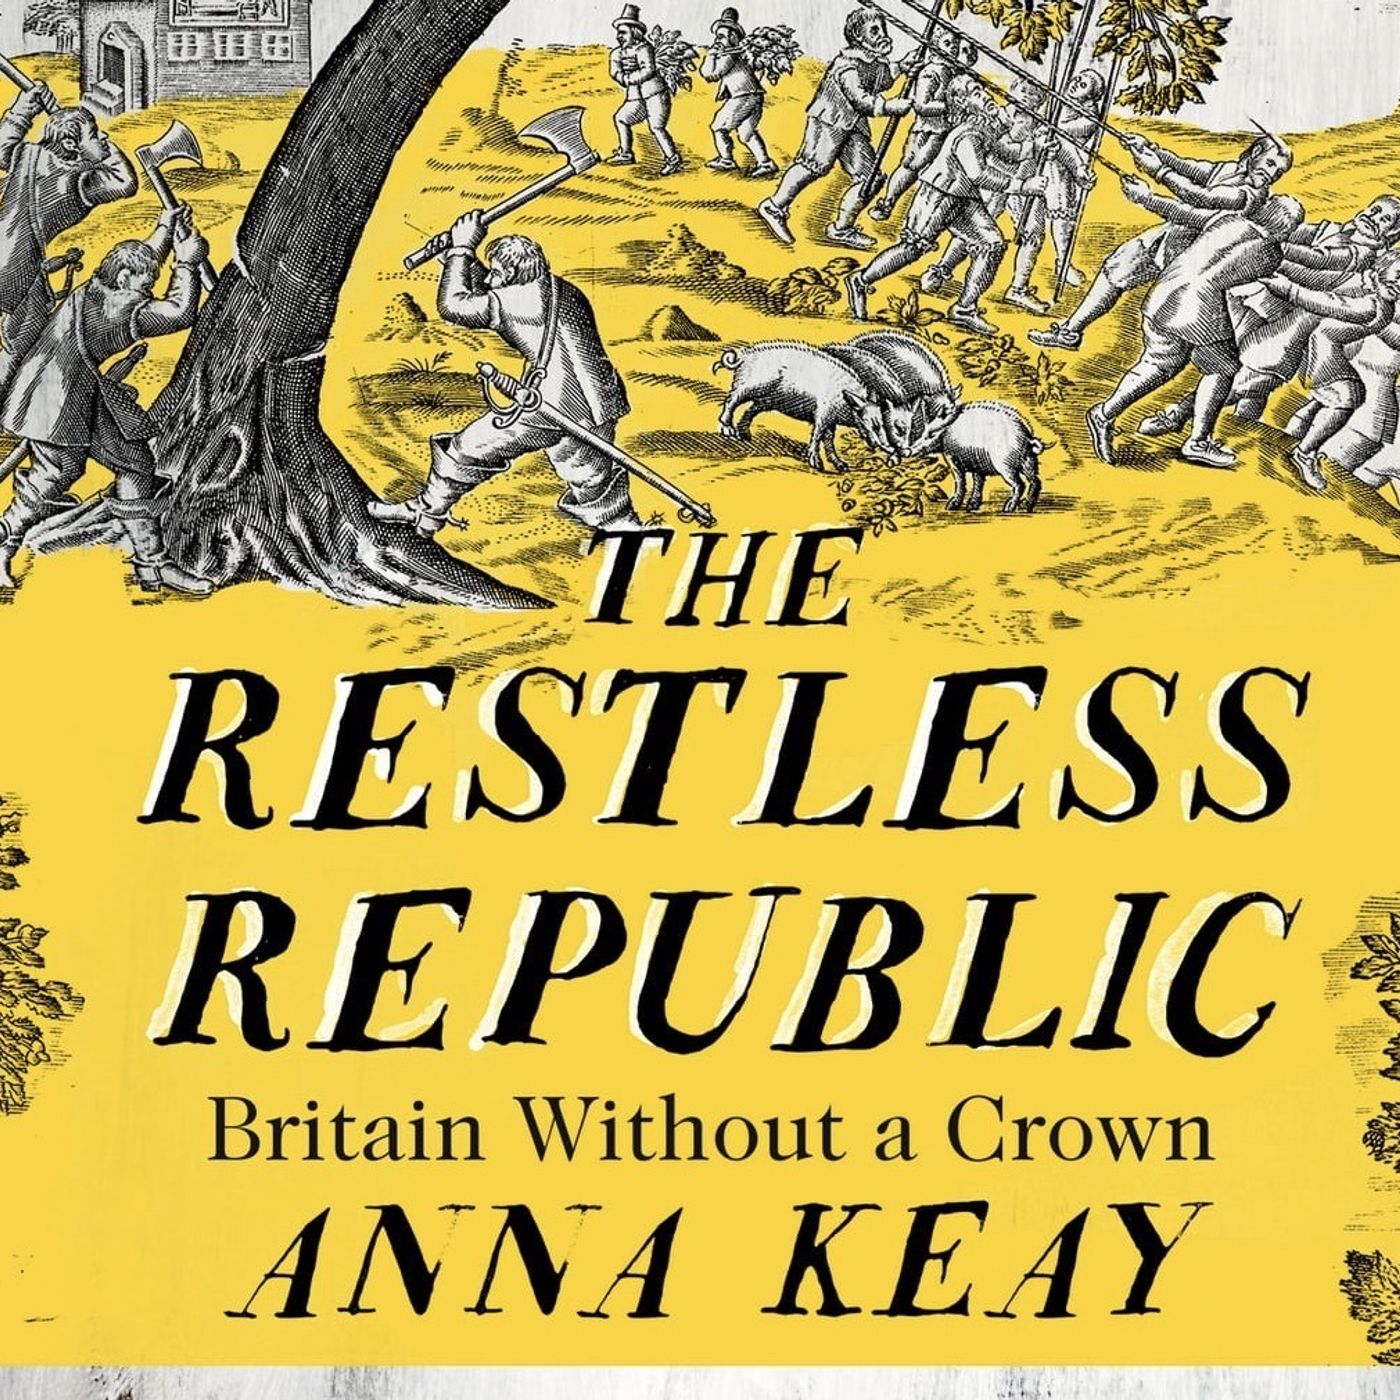 Anna Keay: The Restless Republic